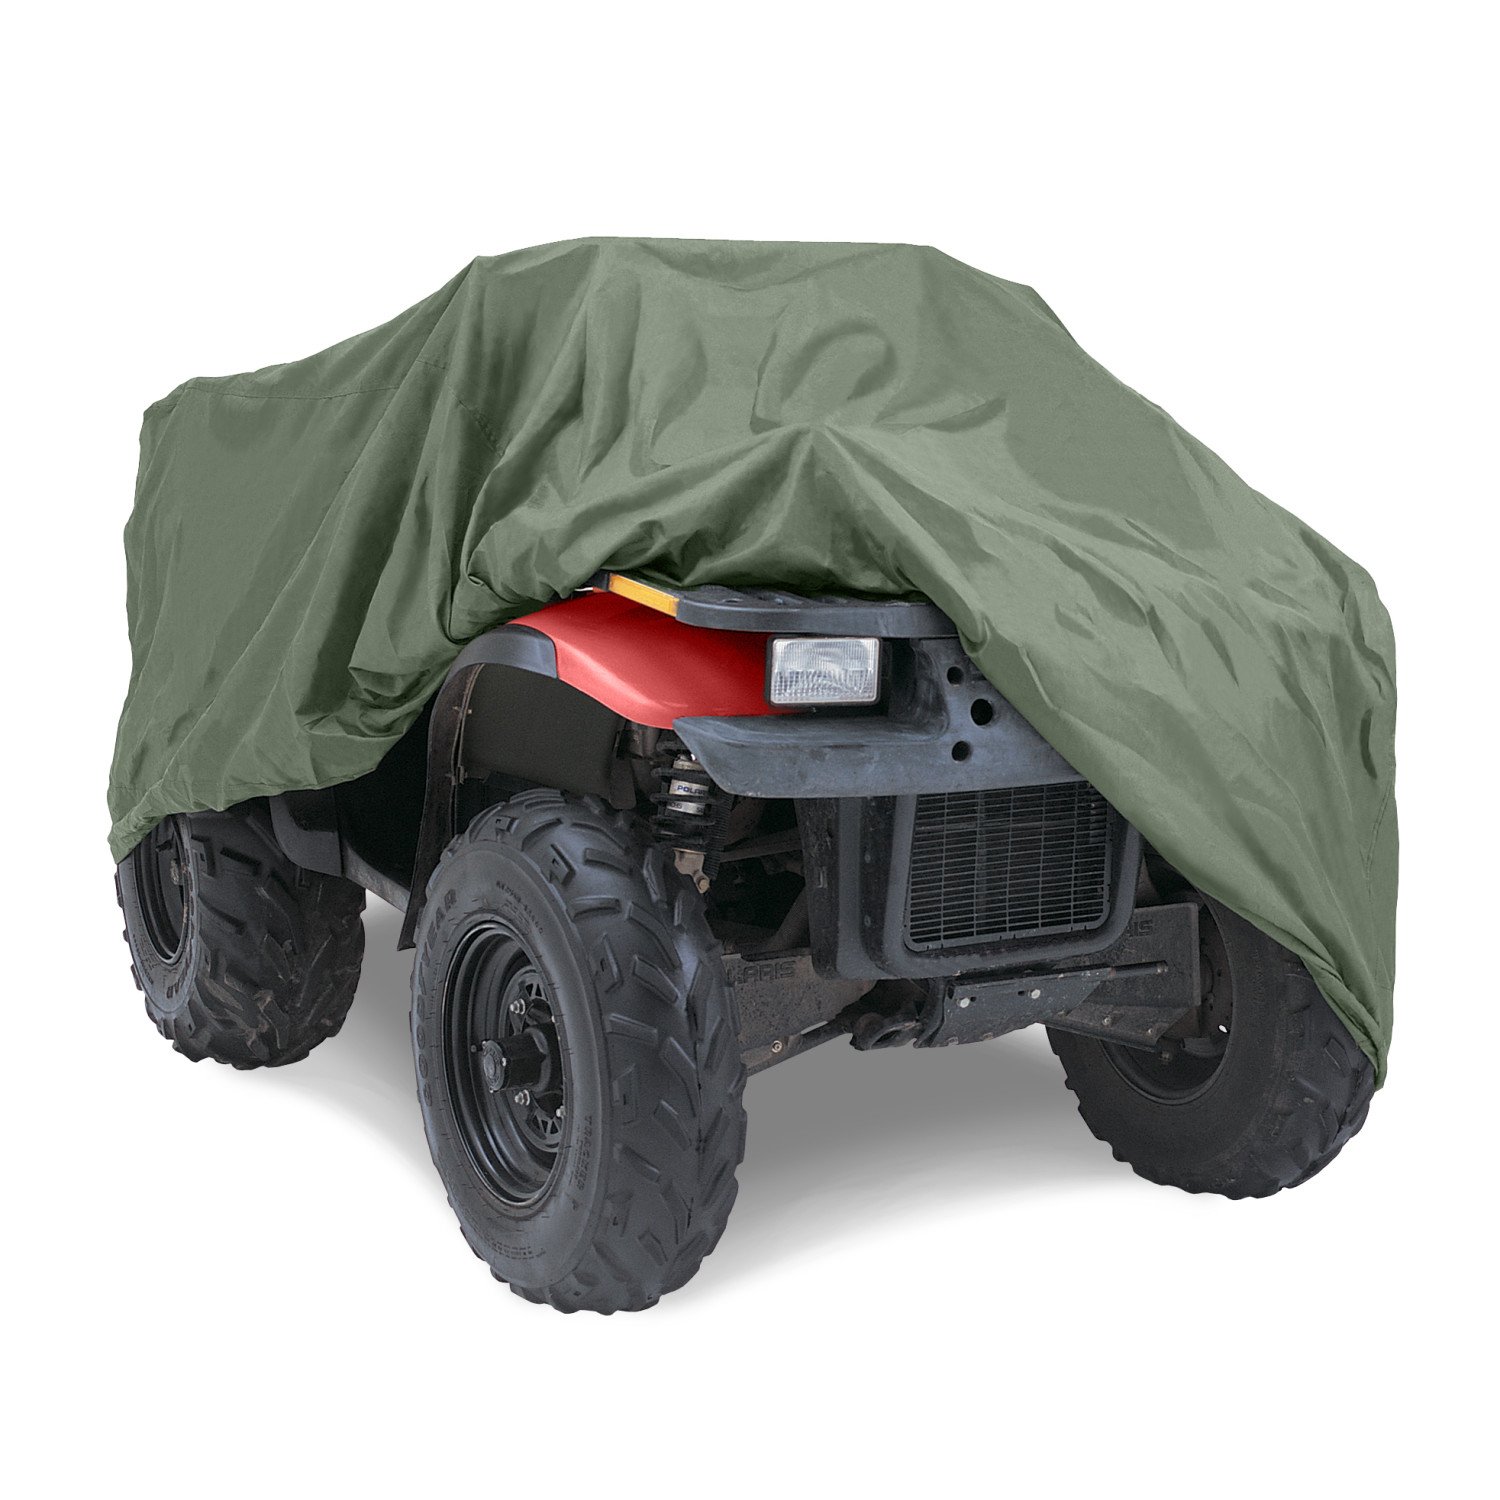 Budge ATV-1 Sportsman ATV Cover, Olive Green, Waterproof, Heavy Duty, Large, 75" Long x 45" Wide x 34" High